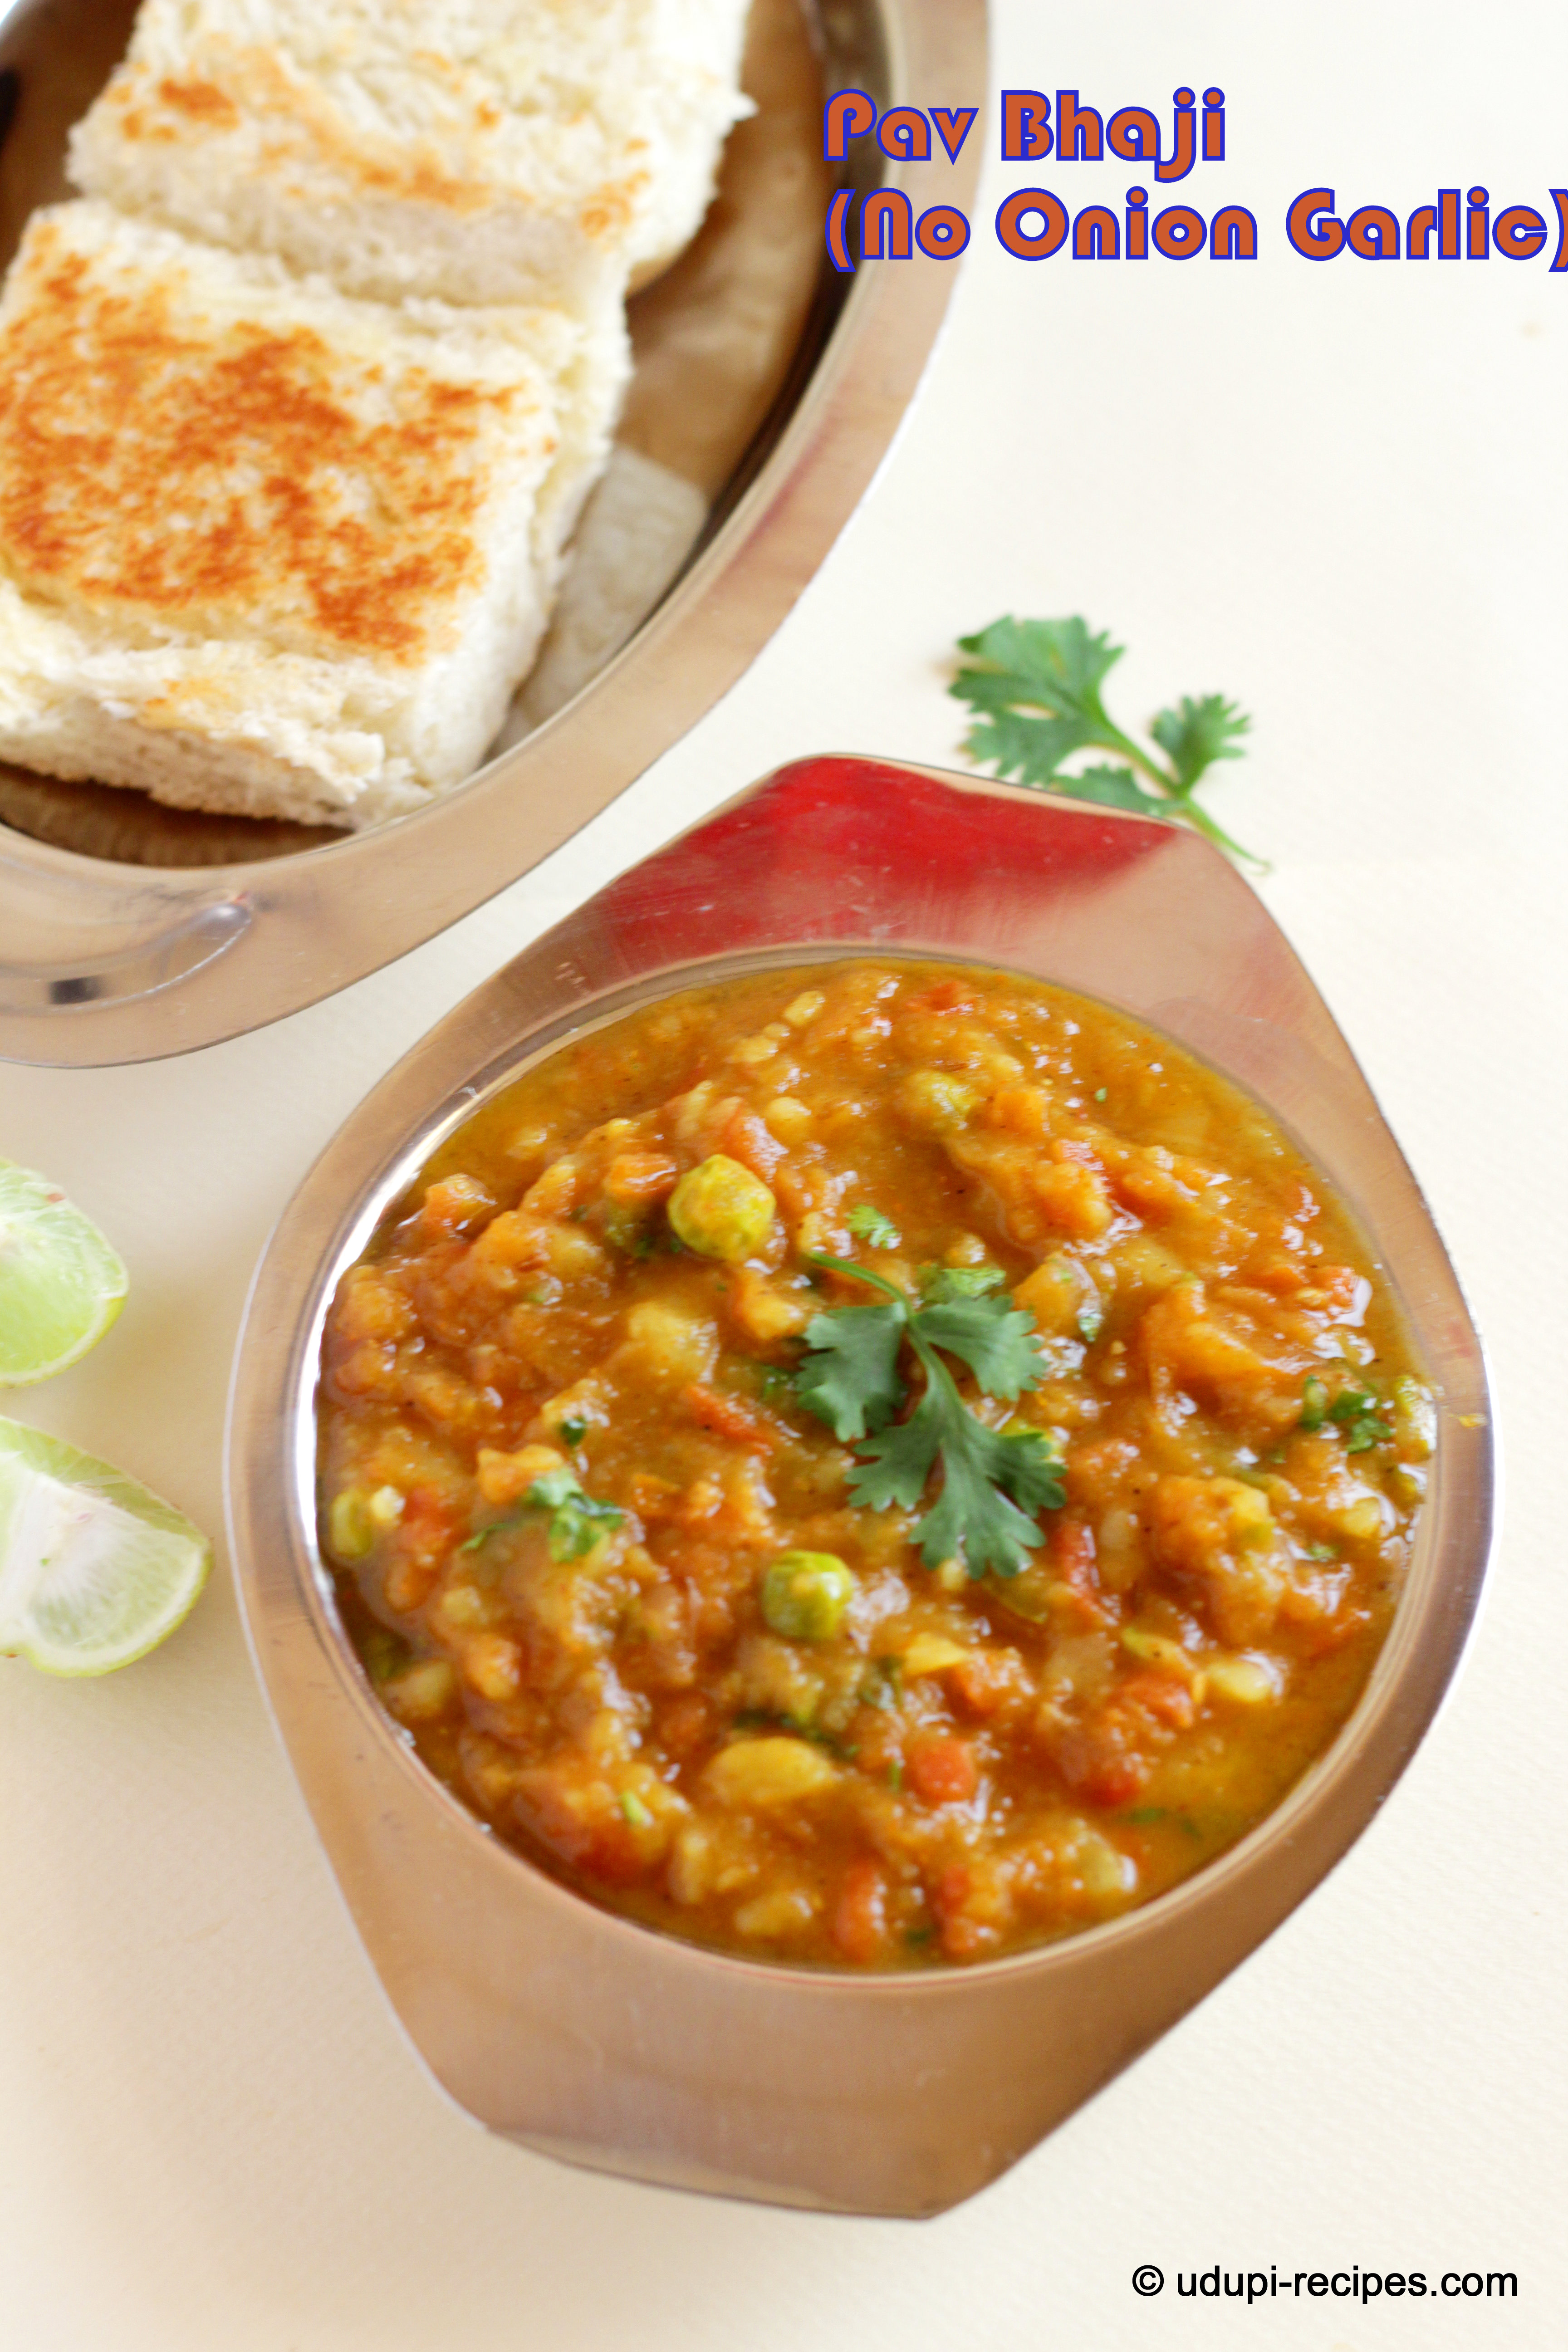 https://udupi-recipes.com/wp-content/uploads/2015/10/Drool-worthy-Pav-bhaji-without-onion.jpg